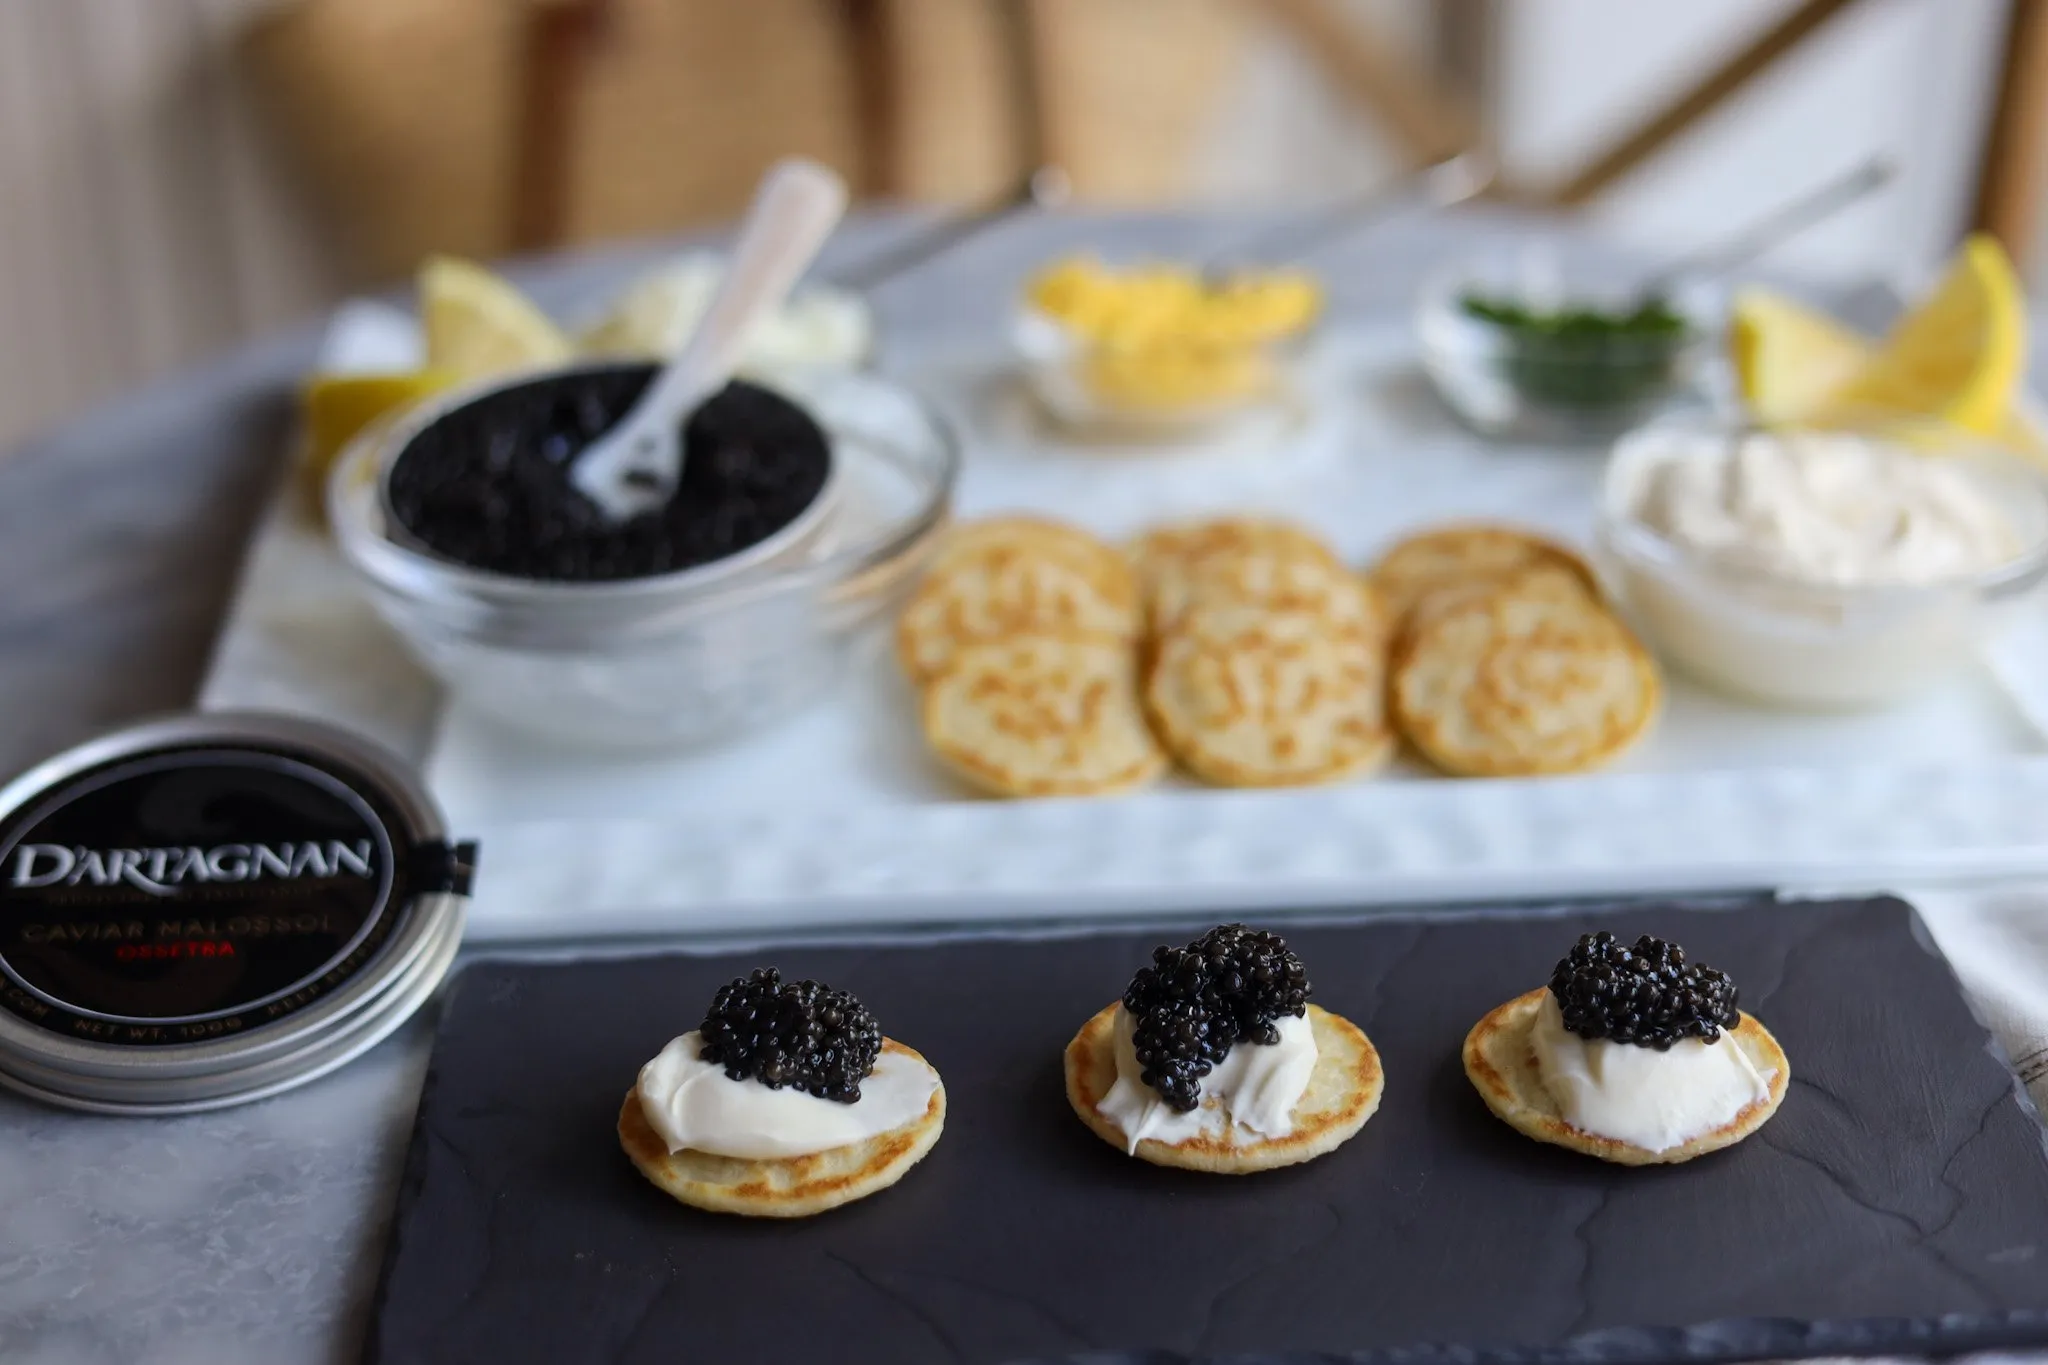 Caviar presentation on blinis with creme fraiche